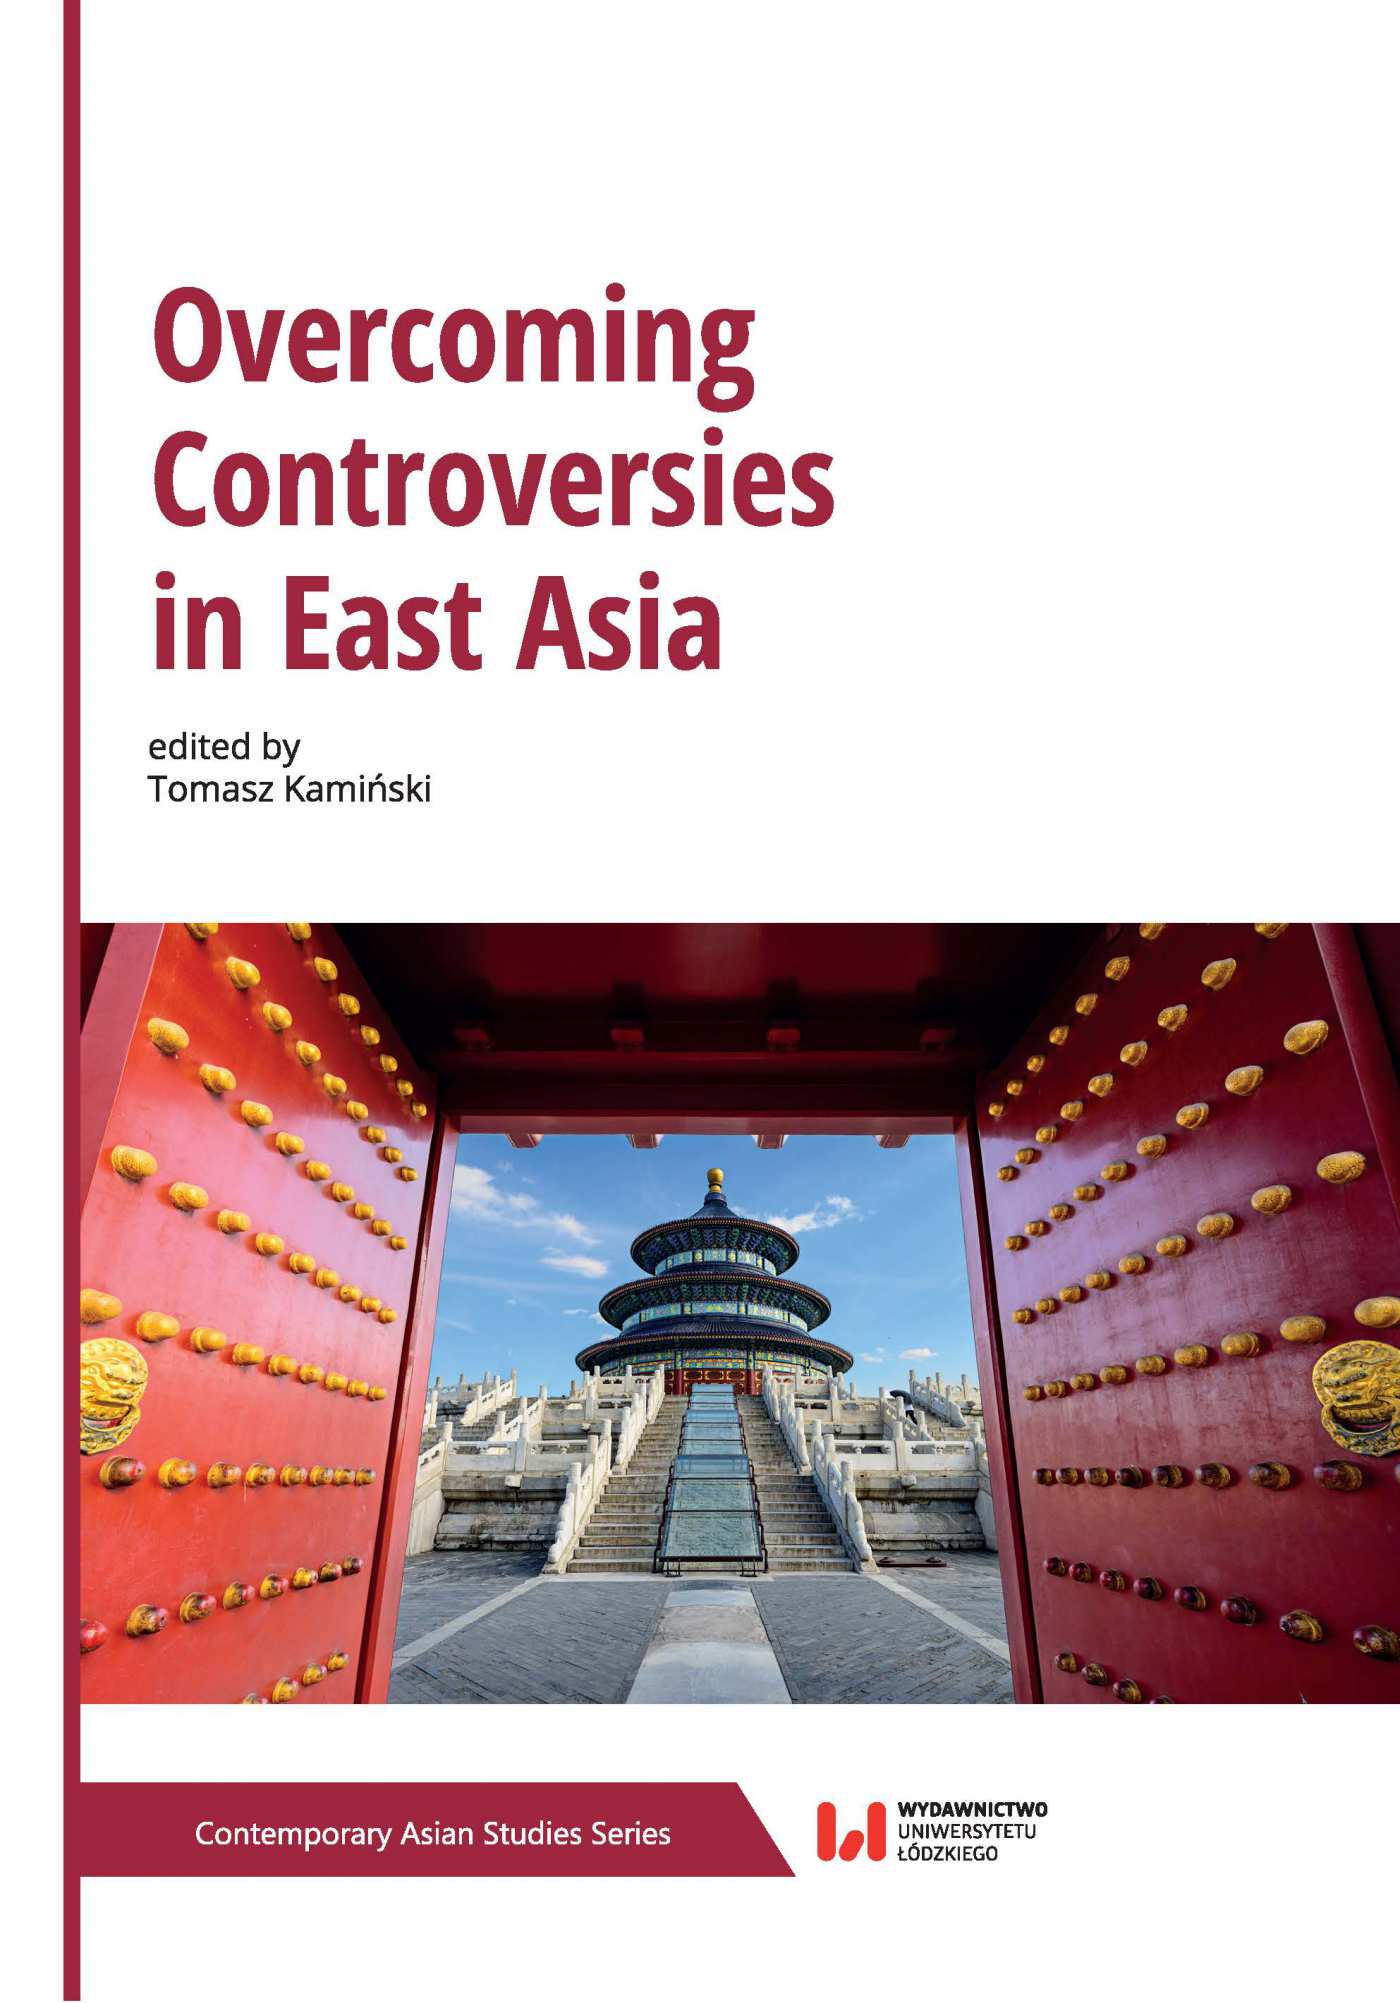 Okładka:Overcoming Controversies in East Asia 